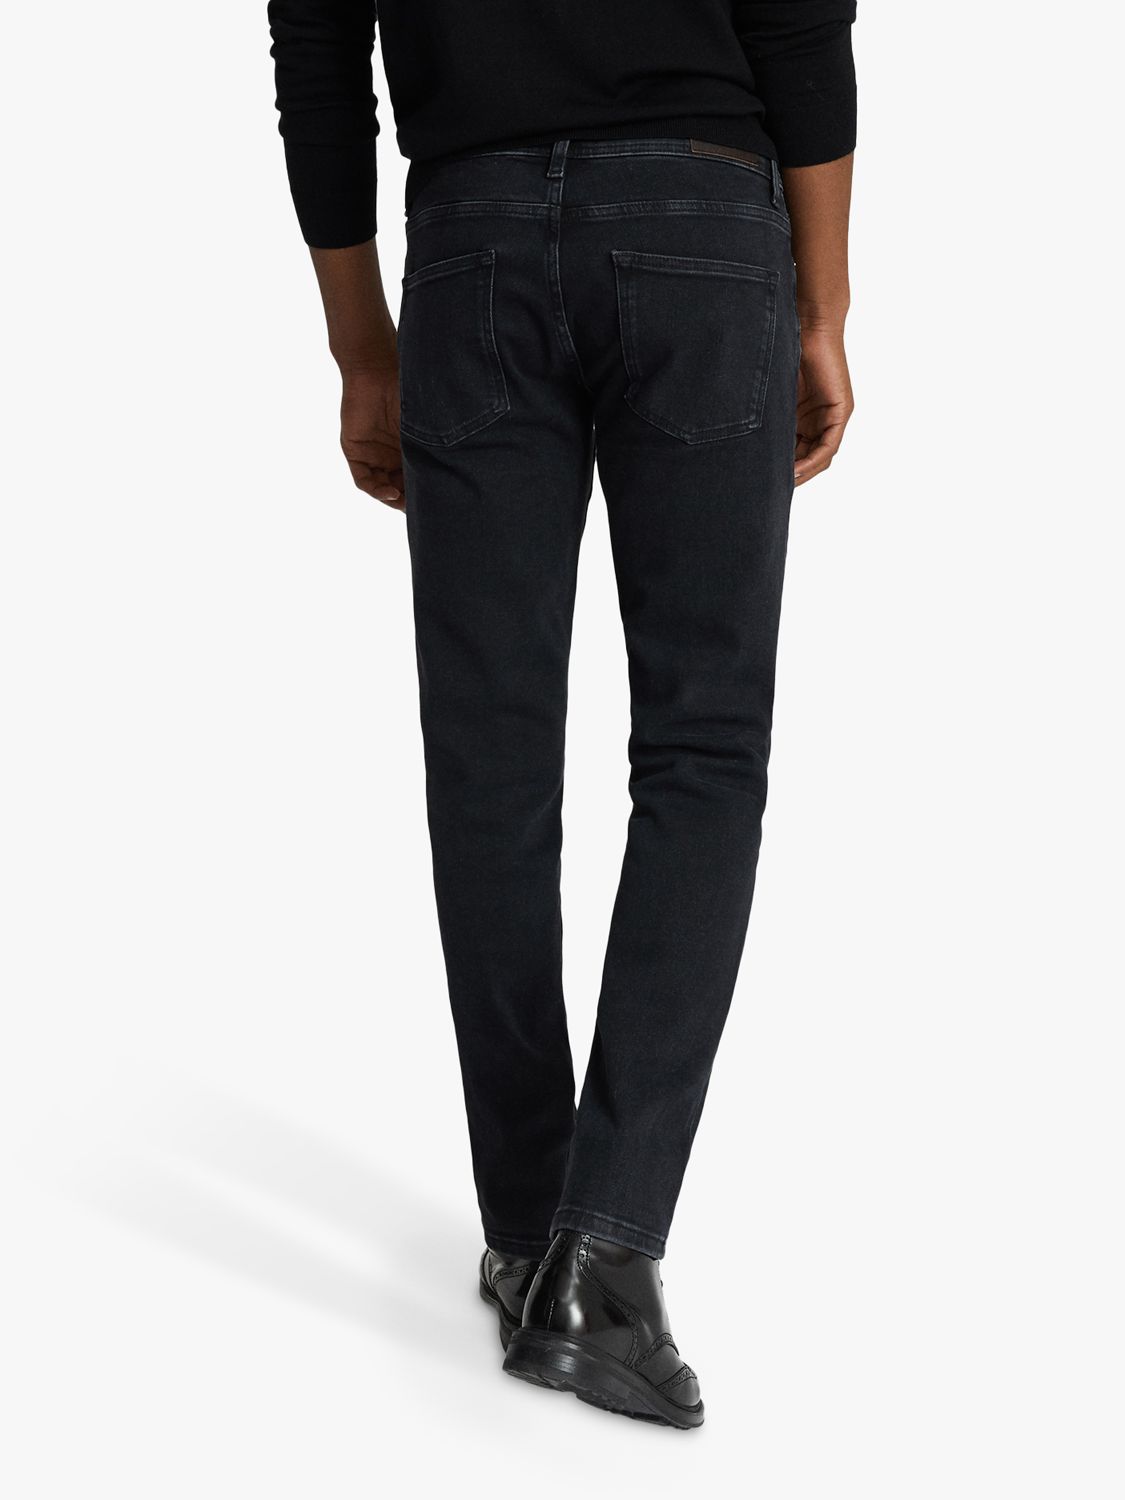 Reiss Harun Tapered Slim Fit Jeans, Black at John Lewis & Partners